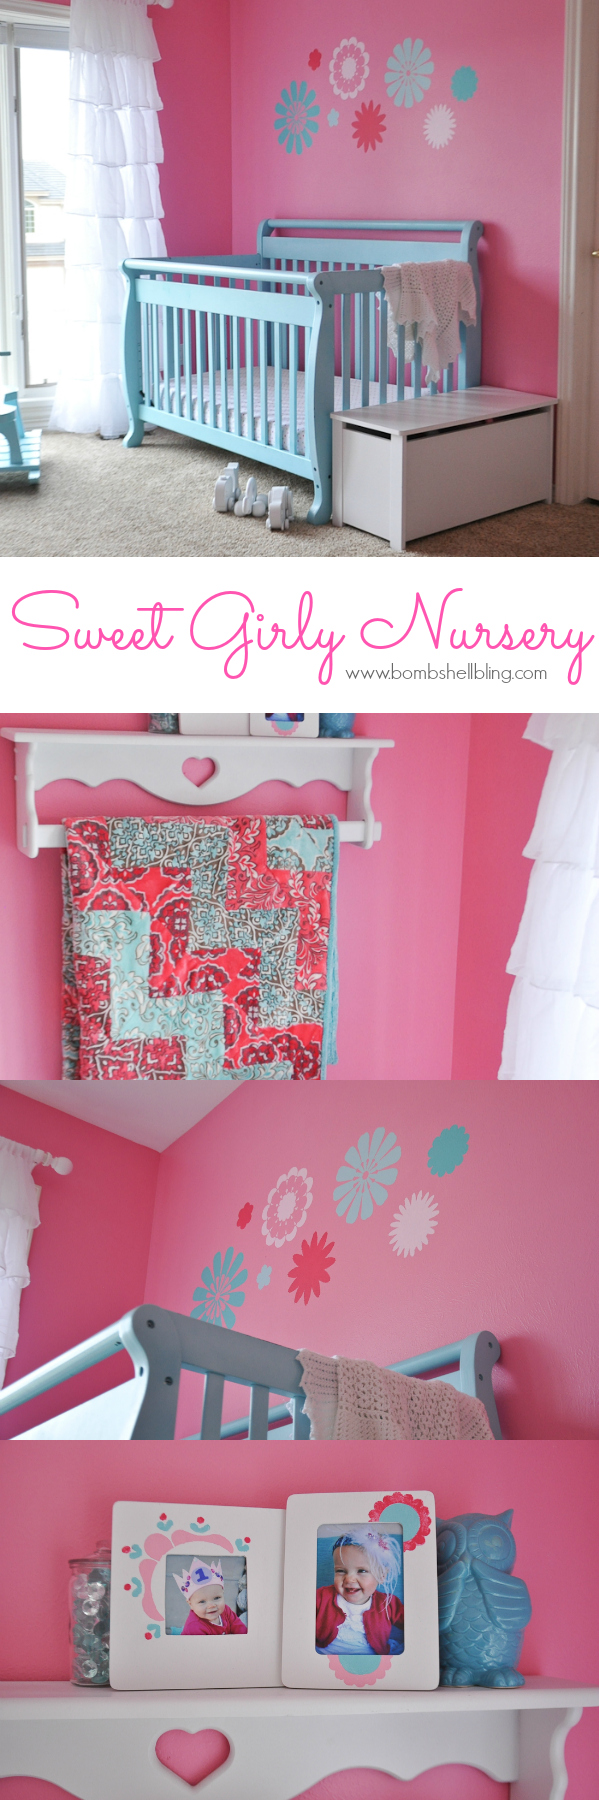 Sweet Girly Nursery